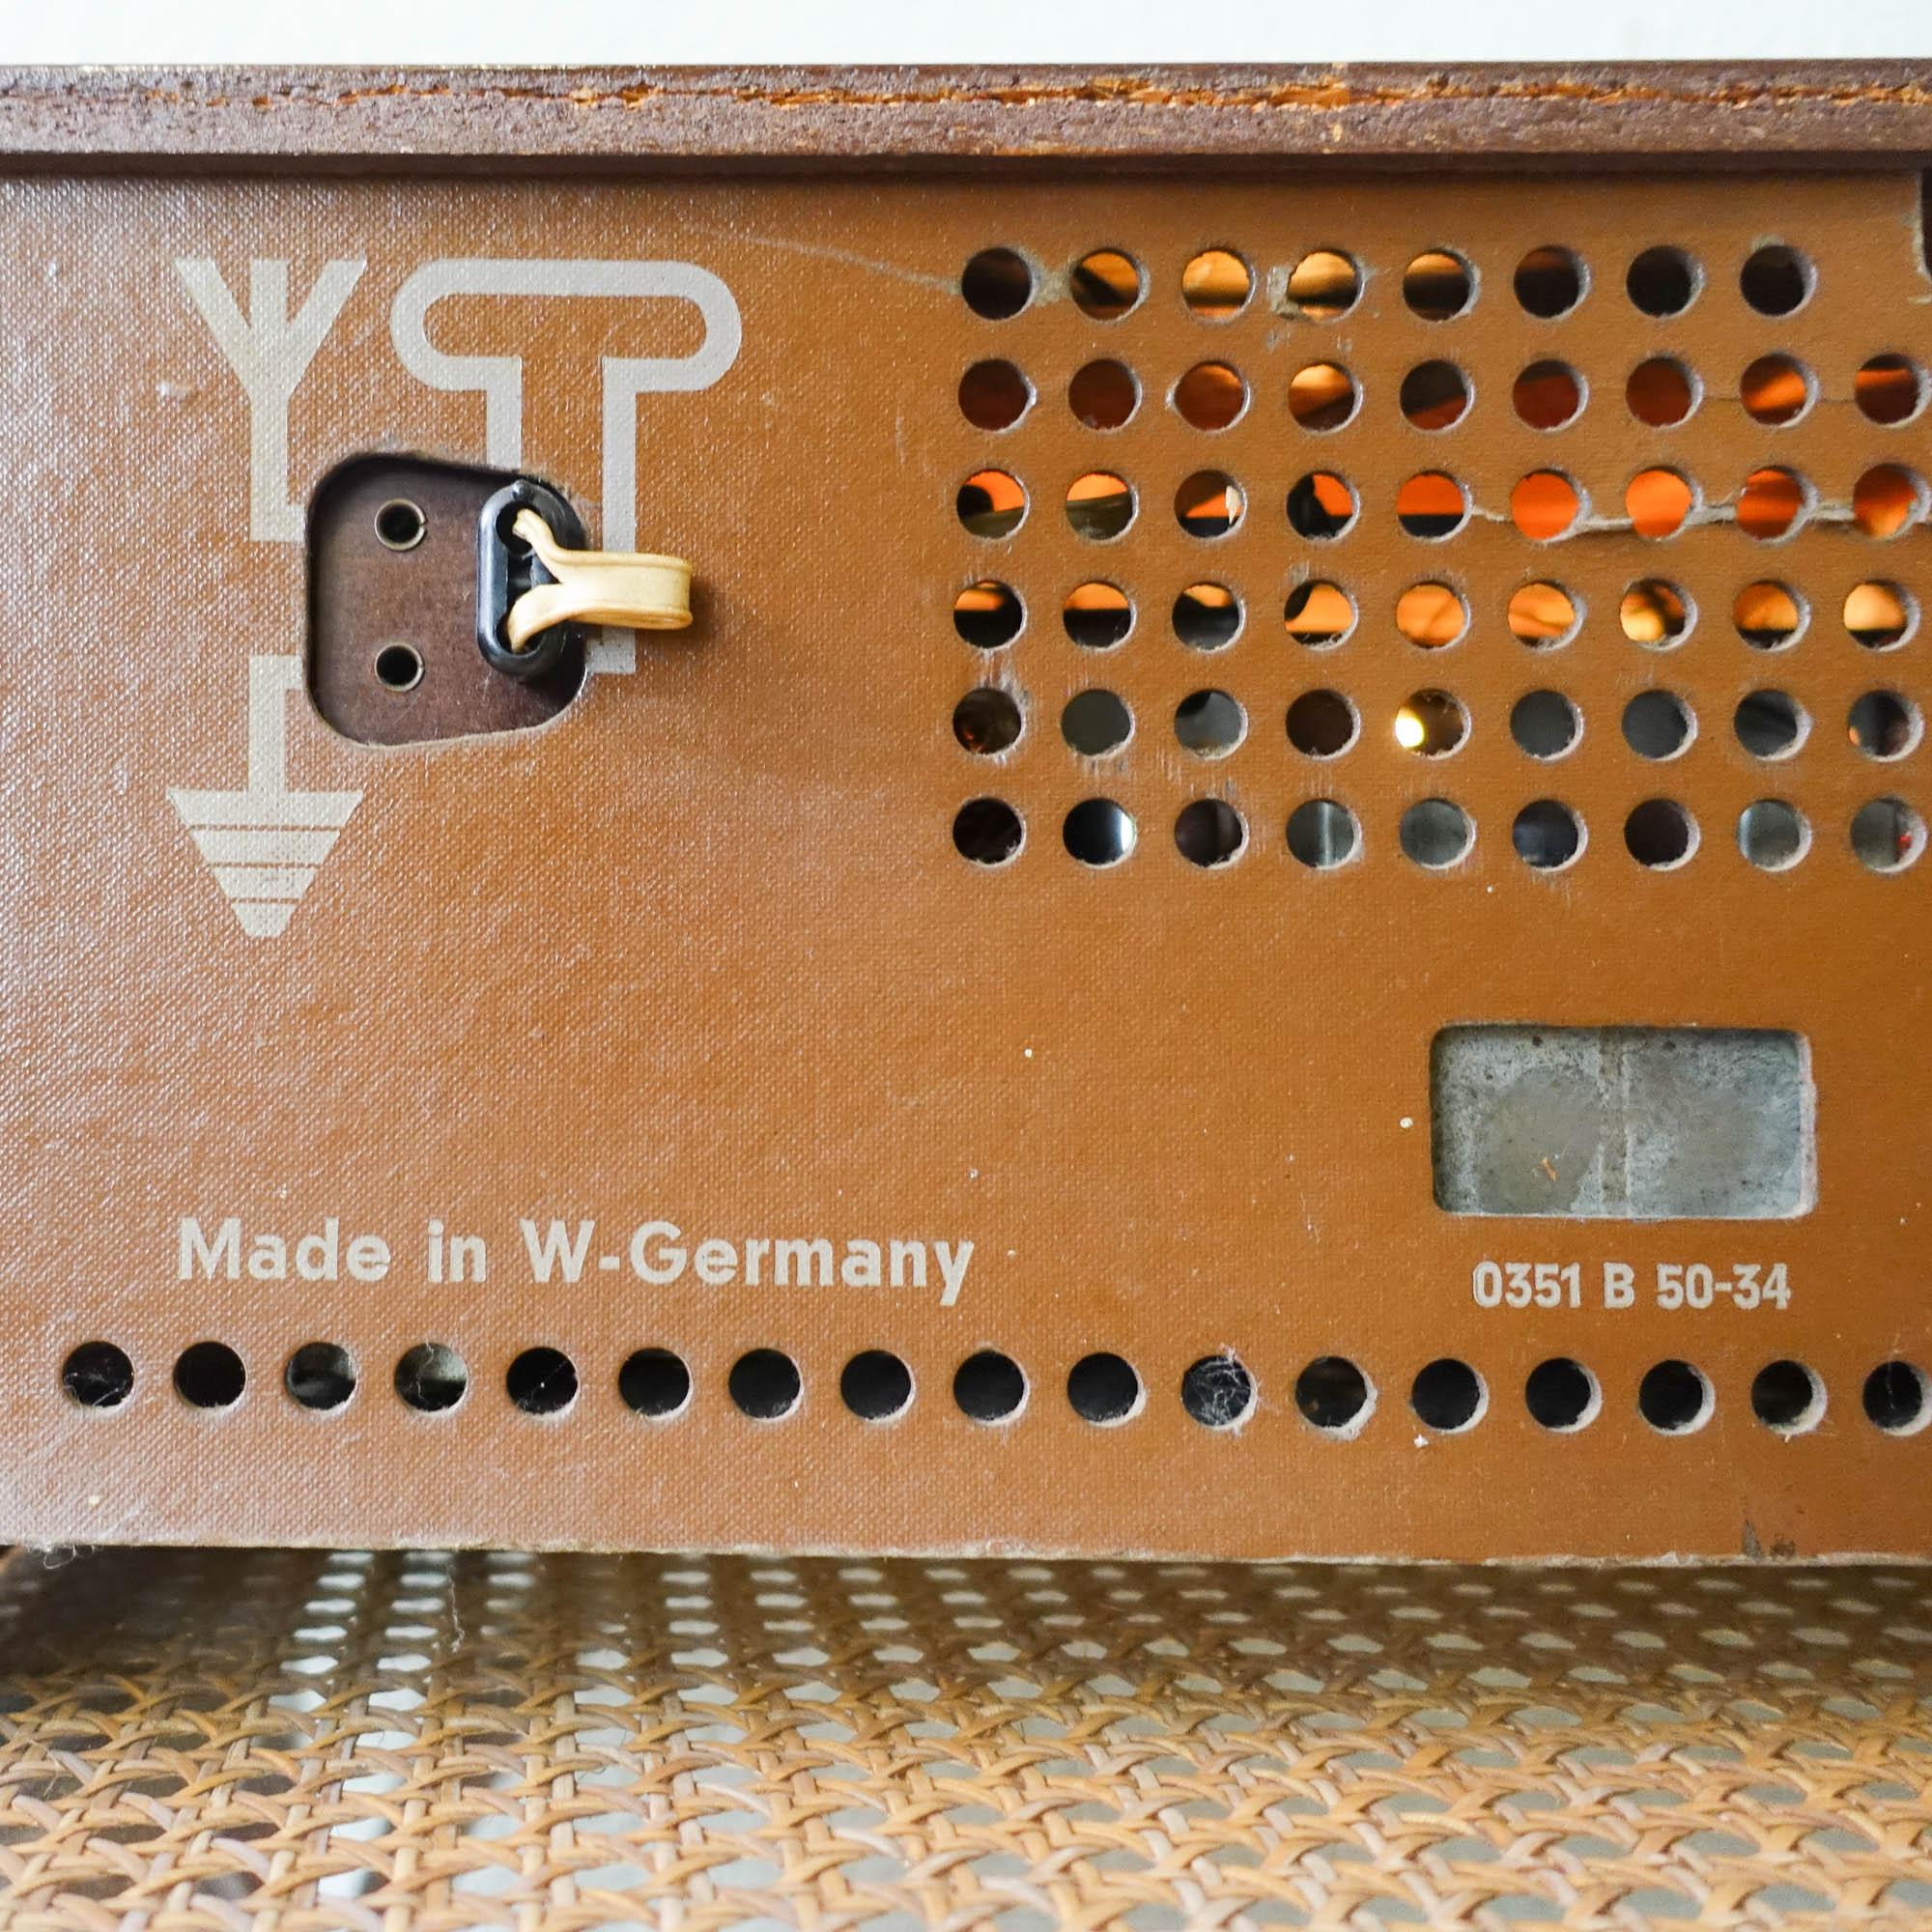 Teak Type 135 Radio from Wega, 1960s For Sale 4